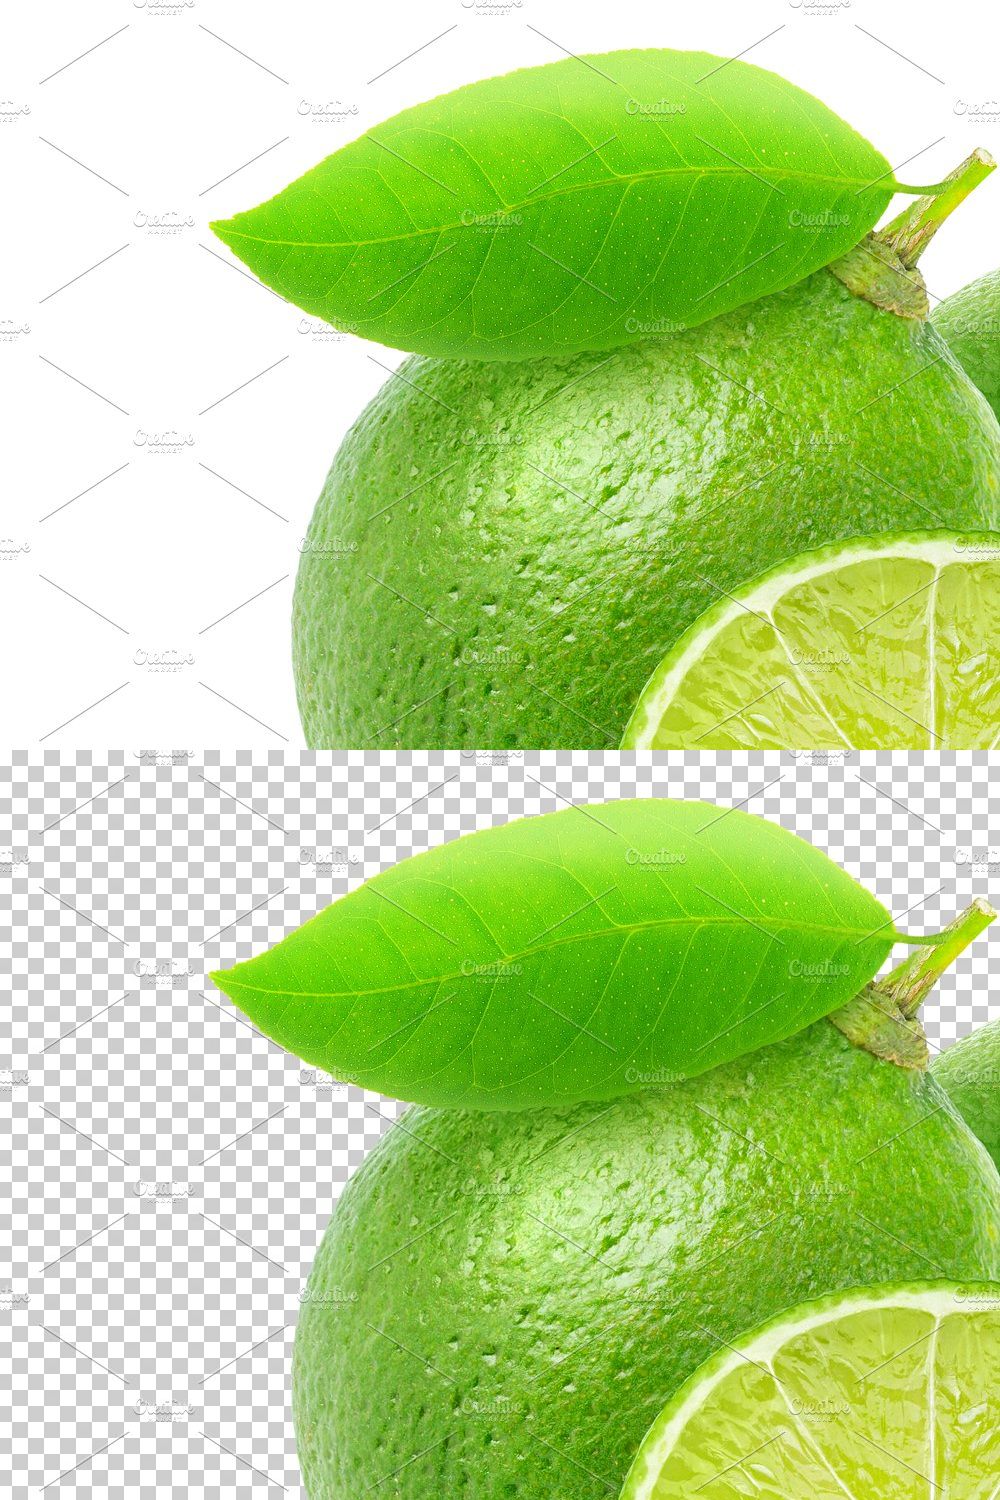 Cut limes pinterest preview image.